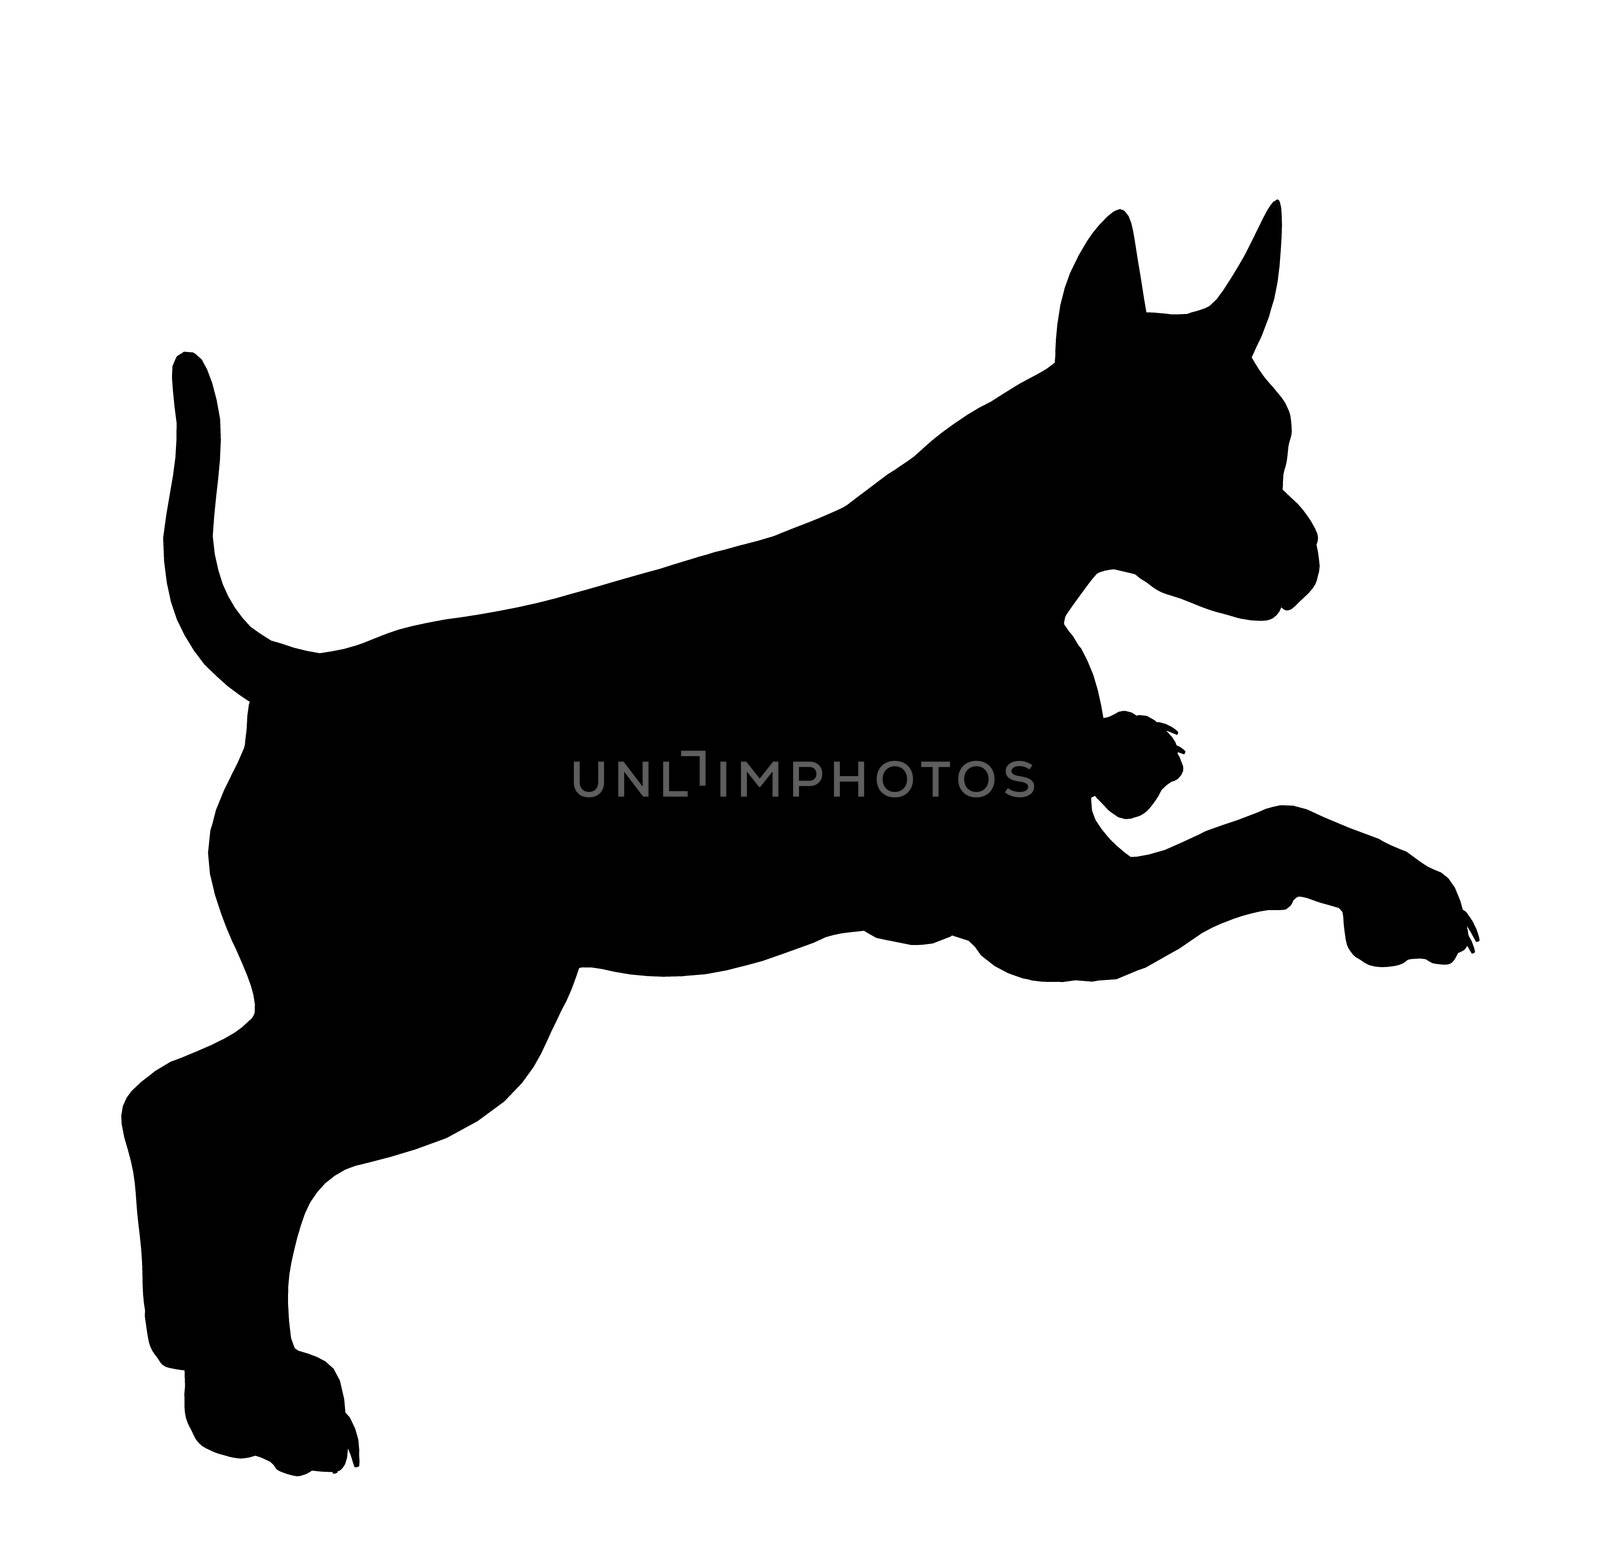 Black puppy dog art illustration silhouette on a white background